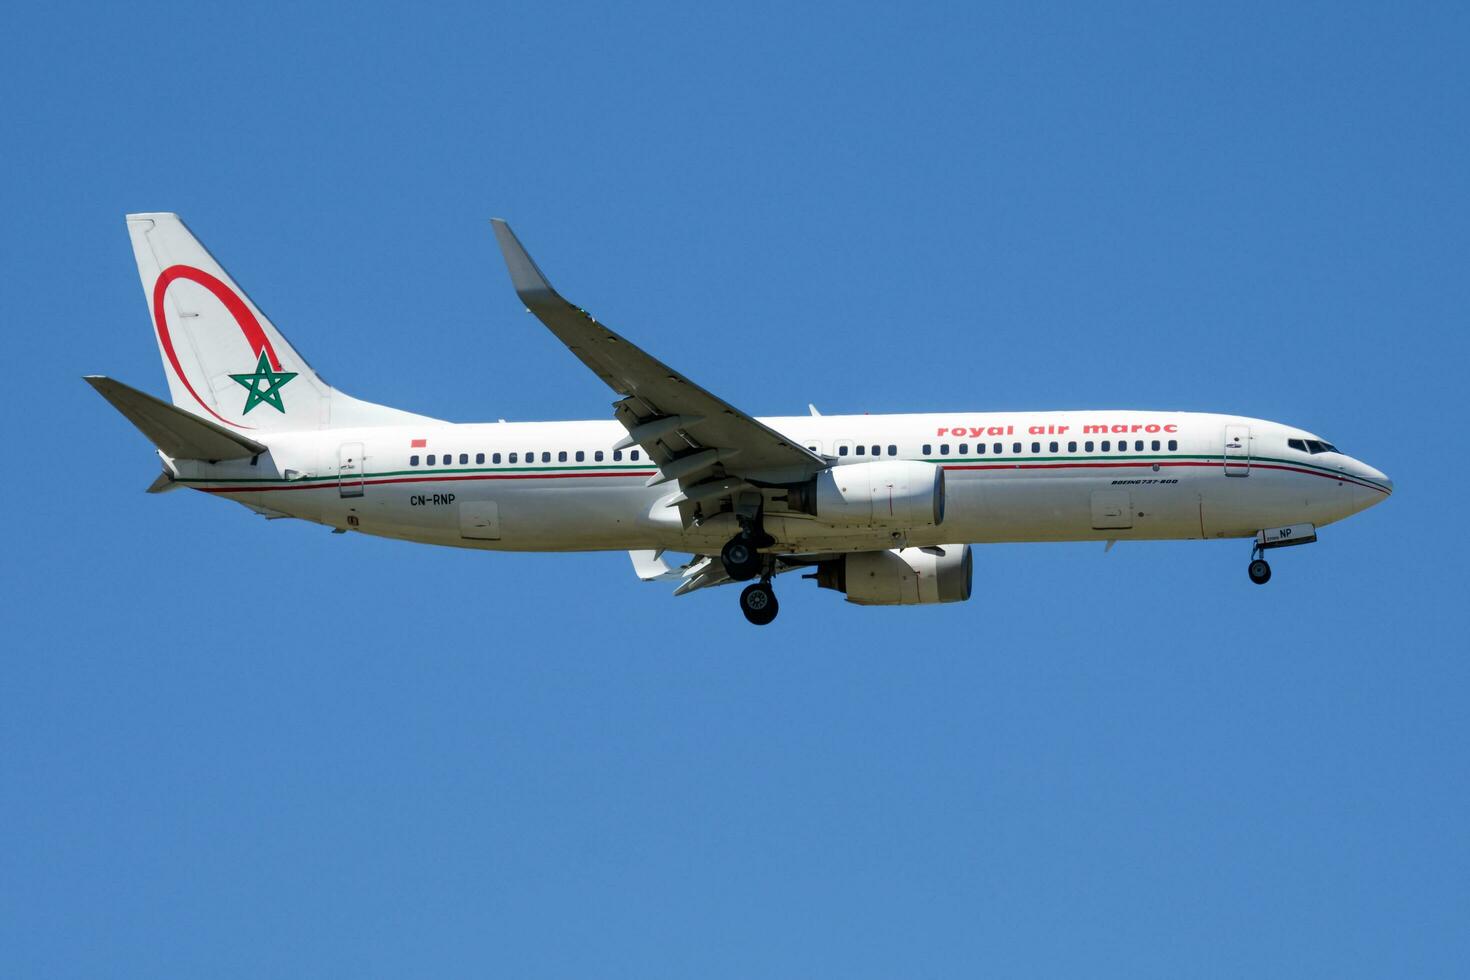 Royal Air Maroc Boeing 737-800 CN-RNP passenger plane landing at Madrid Barajas Airport photo